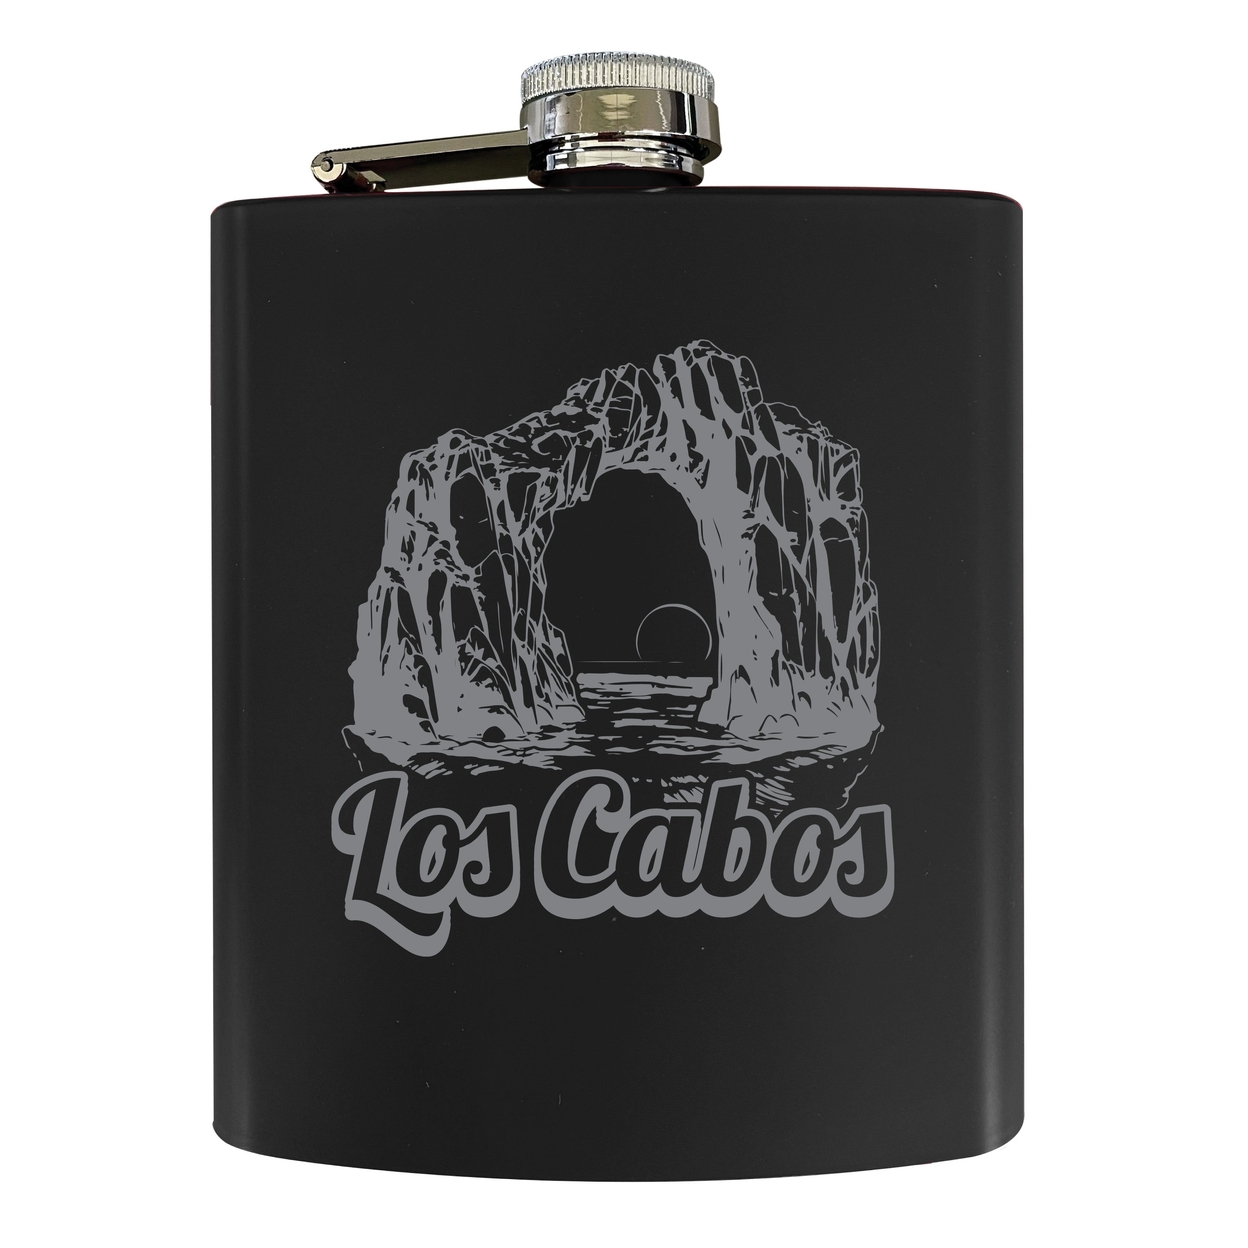 Los Cabos Mexico Souvenir 7 Oz Engraved Steel Flask Matte Finish - Black,,2-Pack